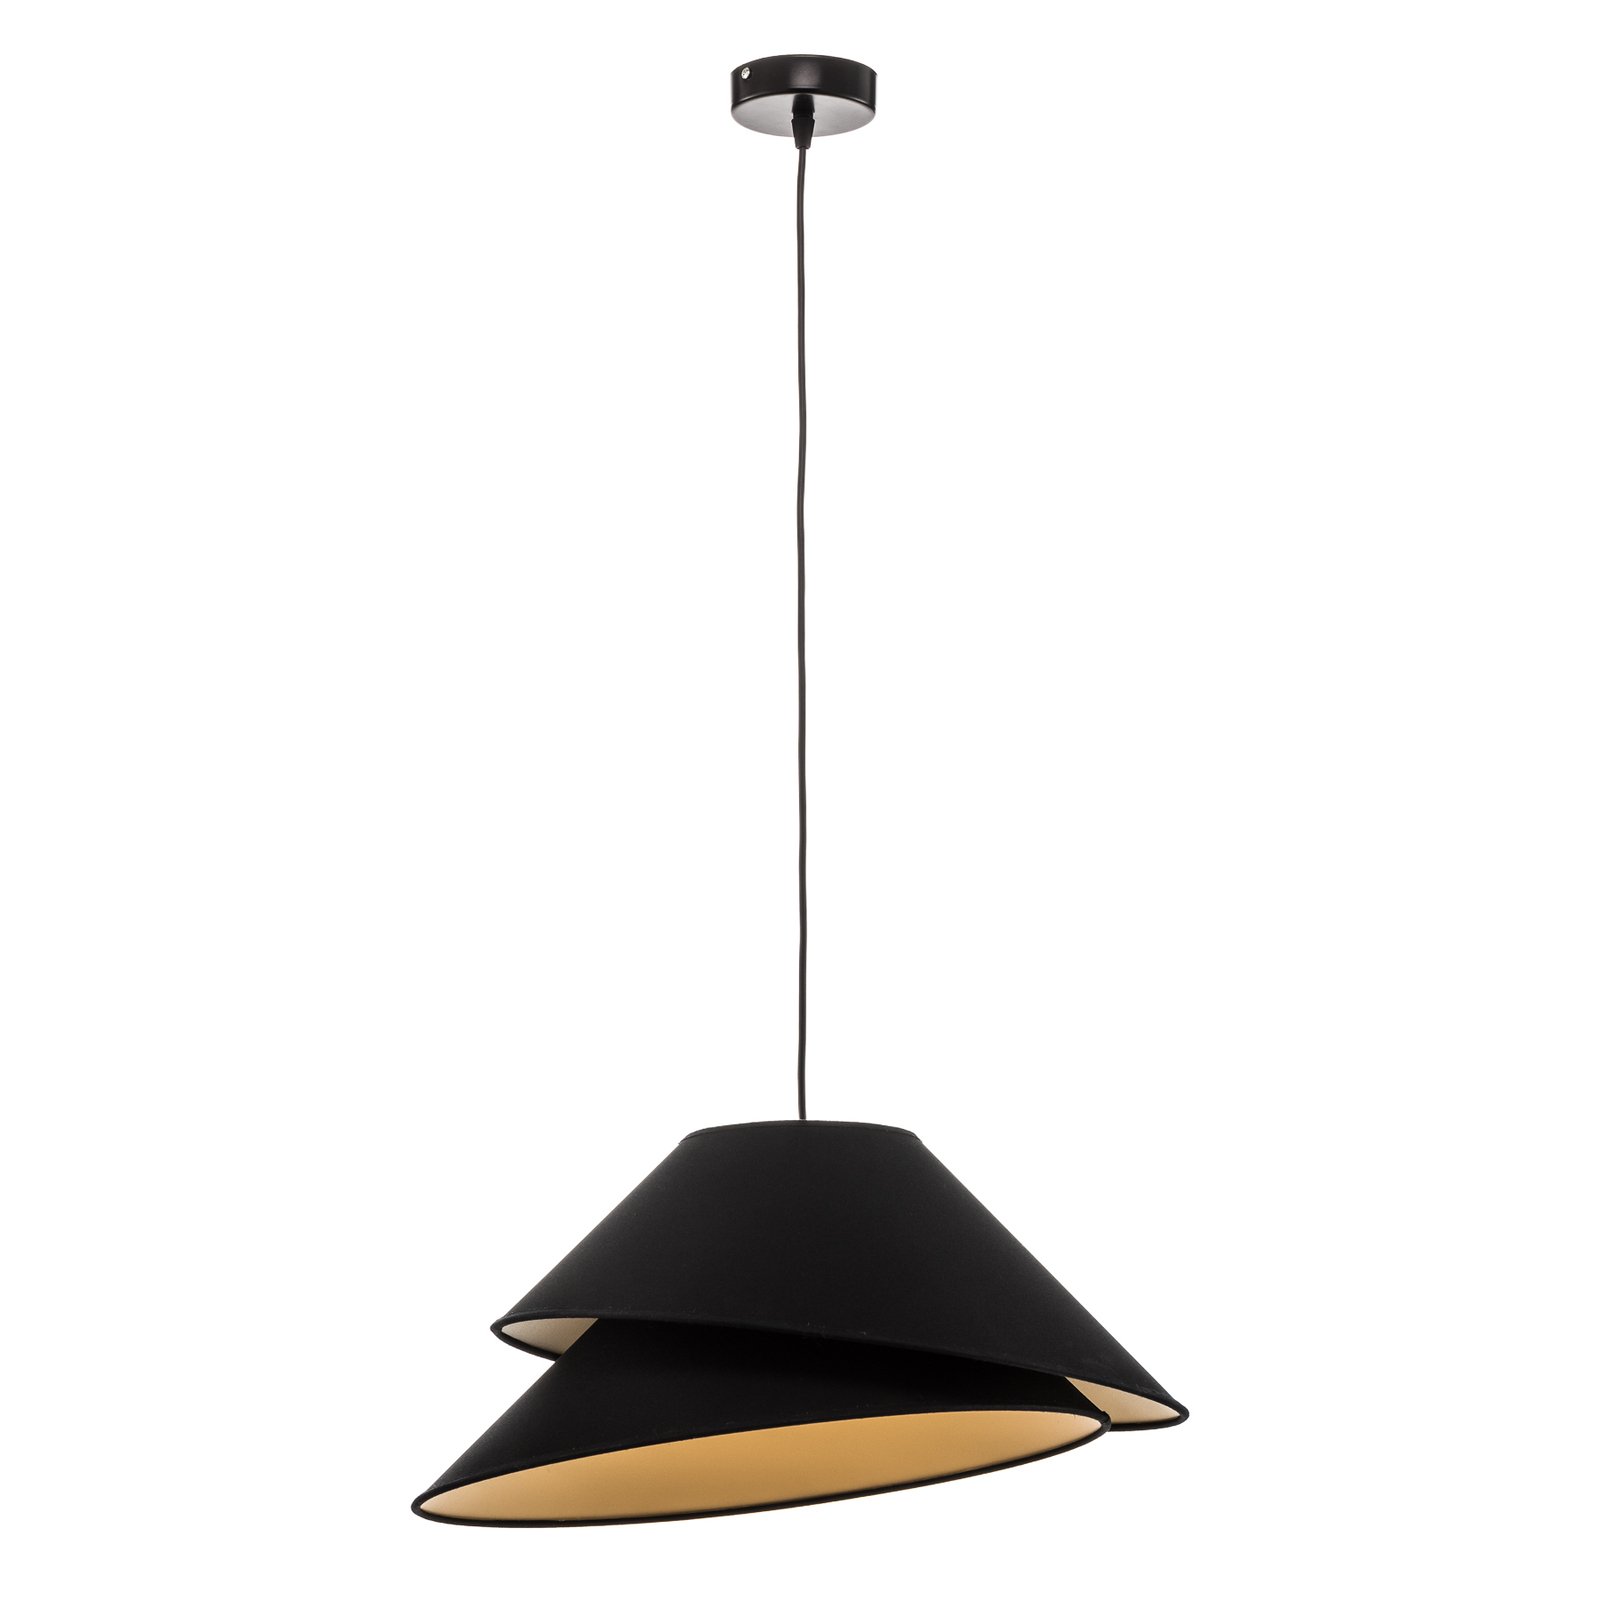 Textiel-hanglamp Coco, zwart